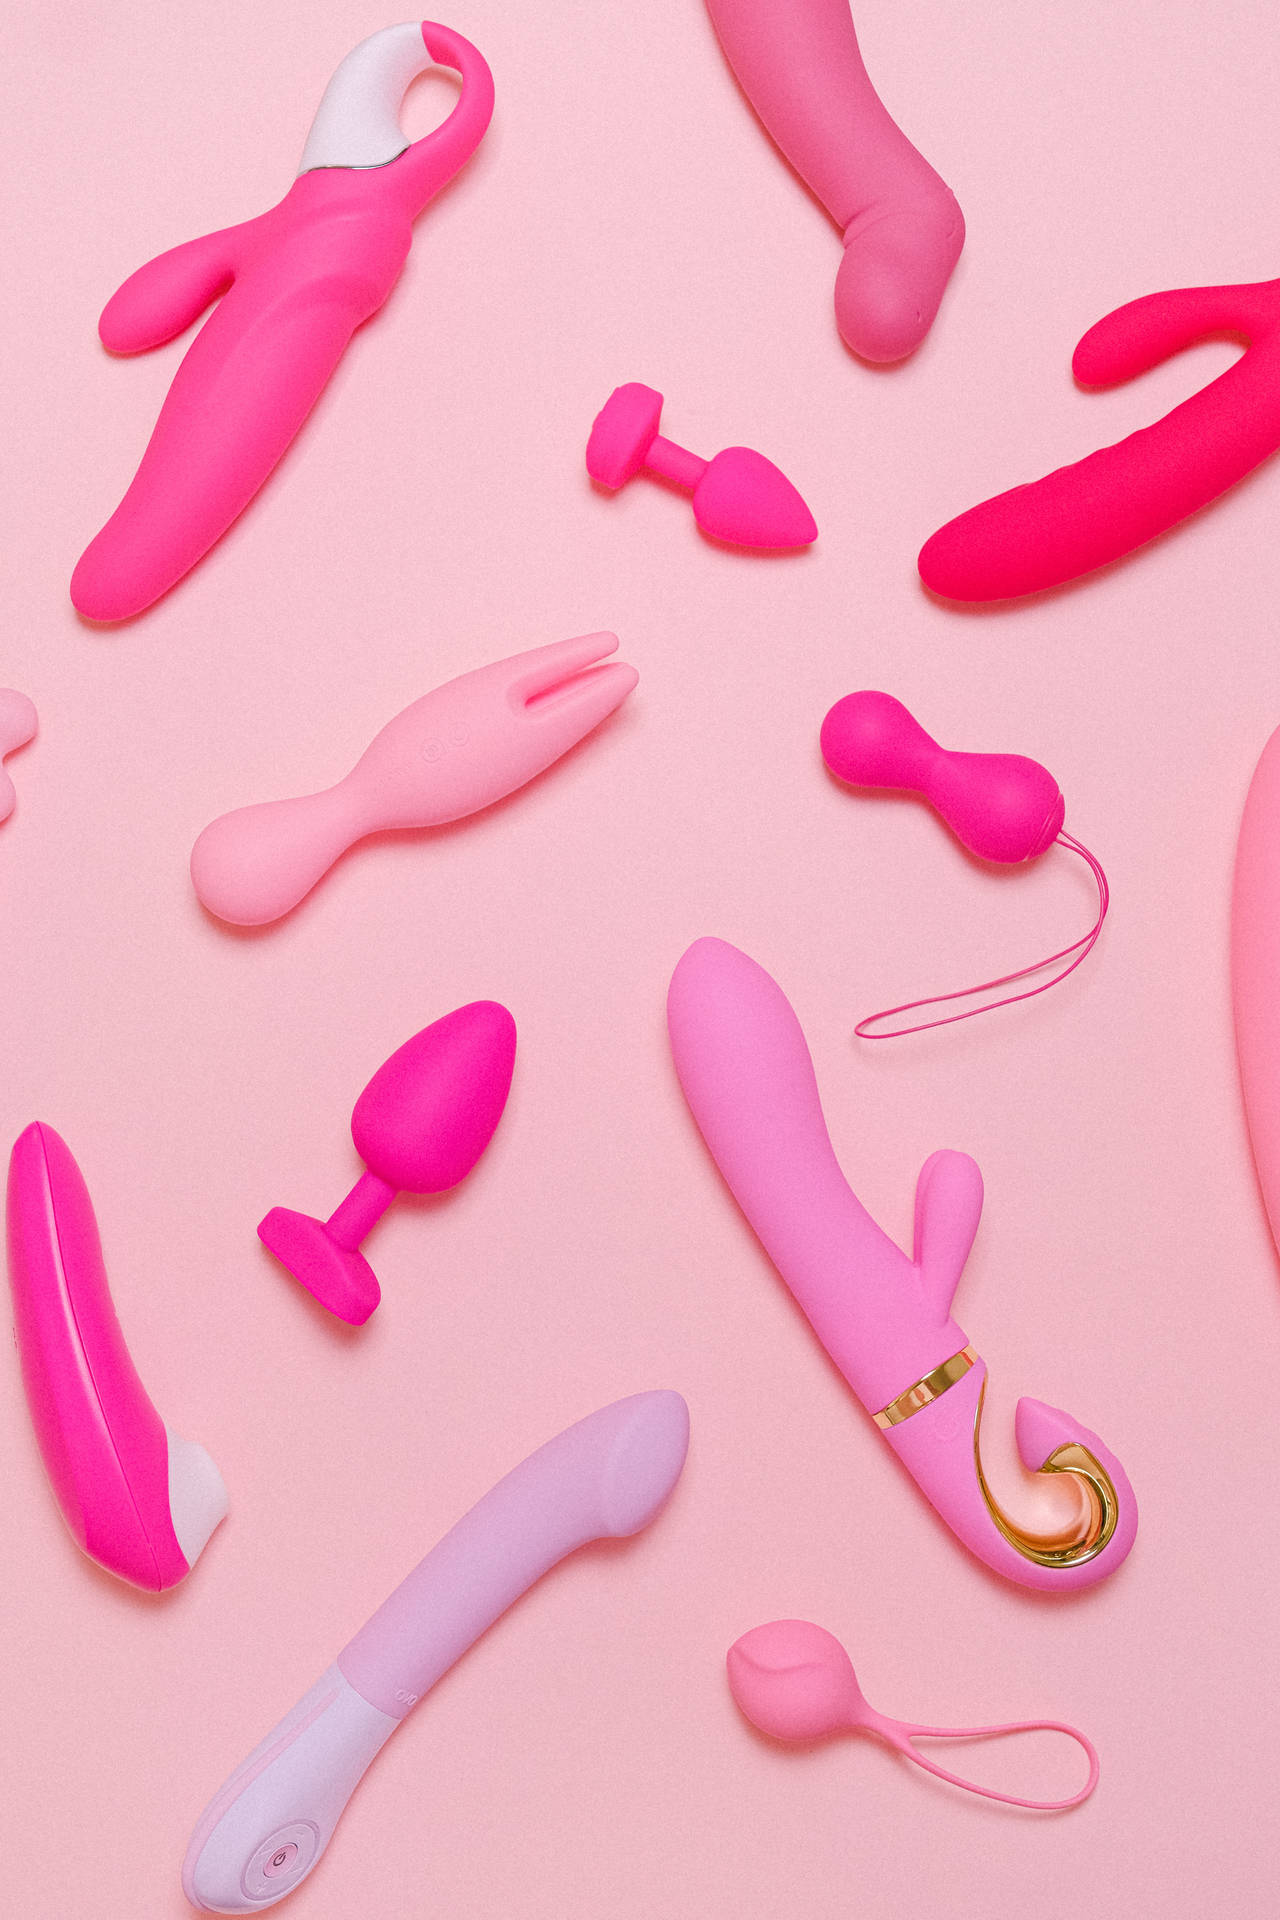 Sexuellesexspielzeuge Wallpaper